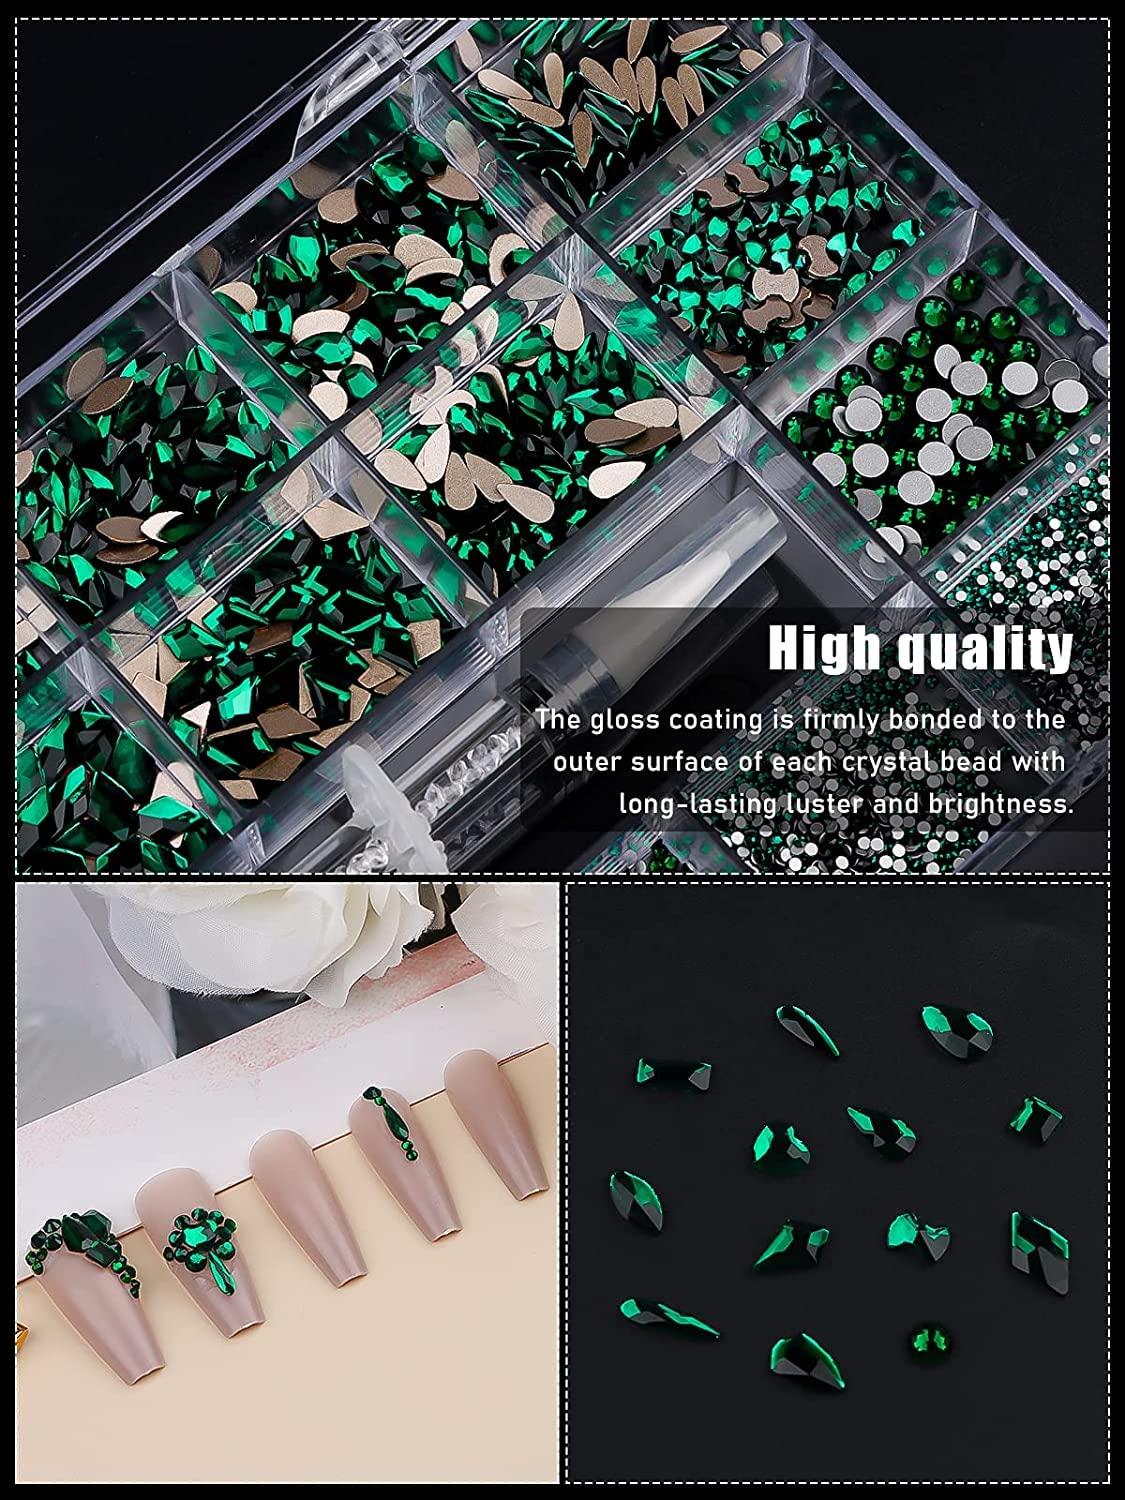 Lanstics 5000Pcs Green Rhinestones for Craft SS12 3mm Emerald Flatback  Rhinestones Gem Stones Round Resin Glitter Rinestones for Nails Art Makeup